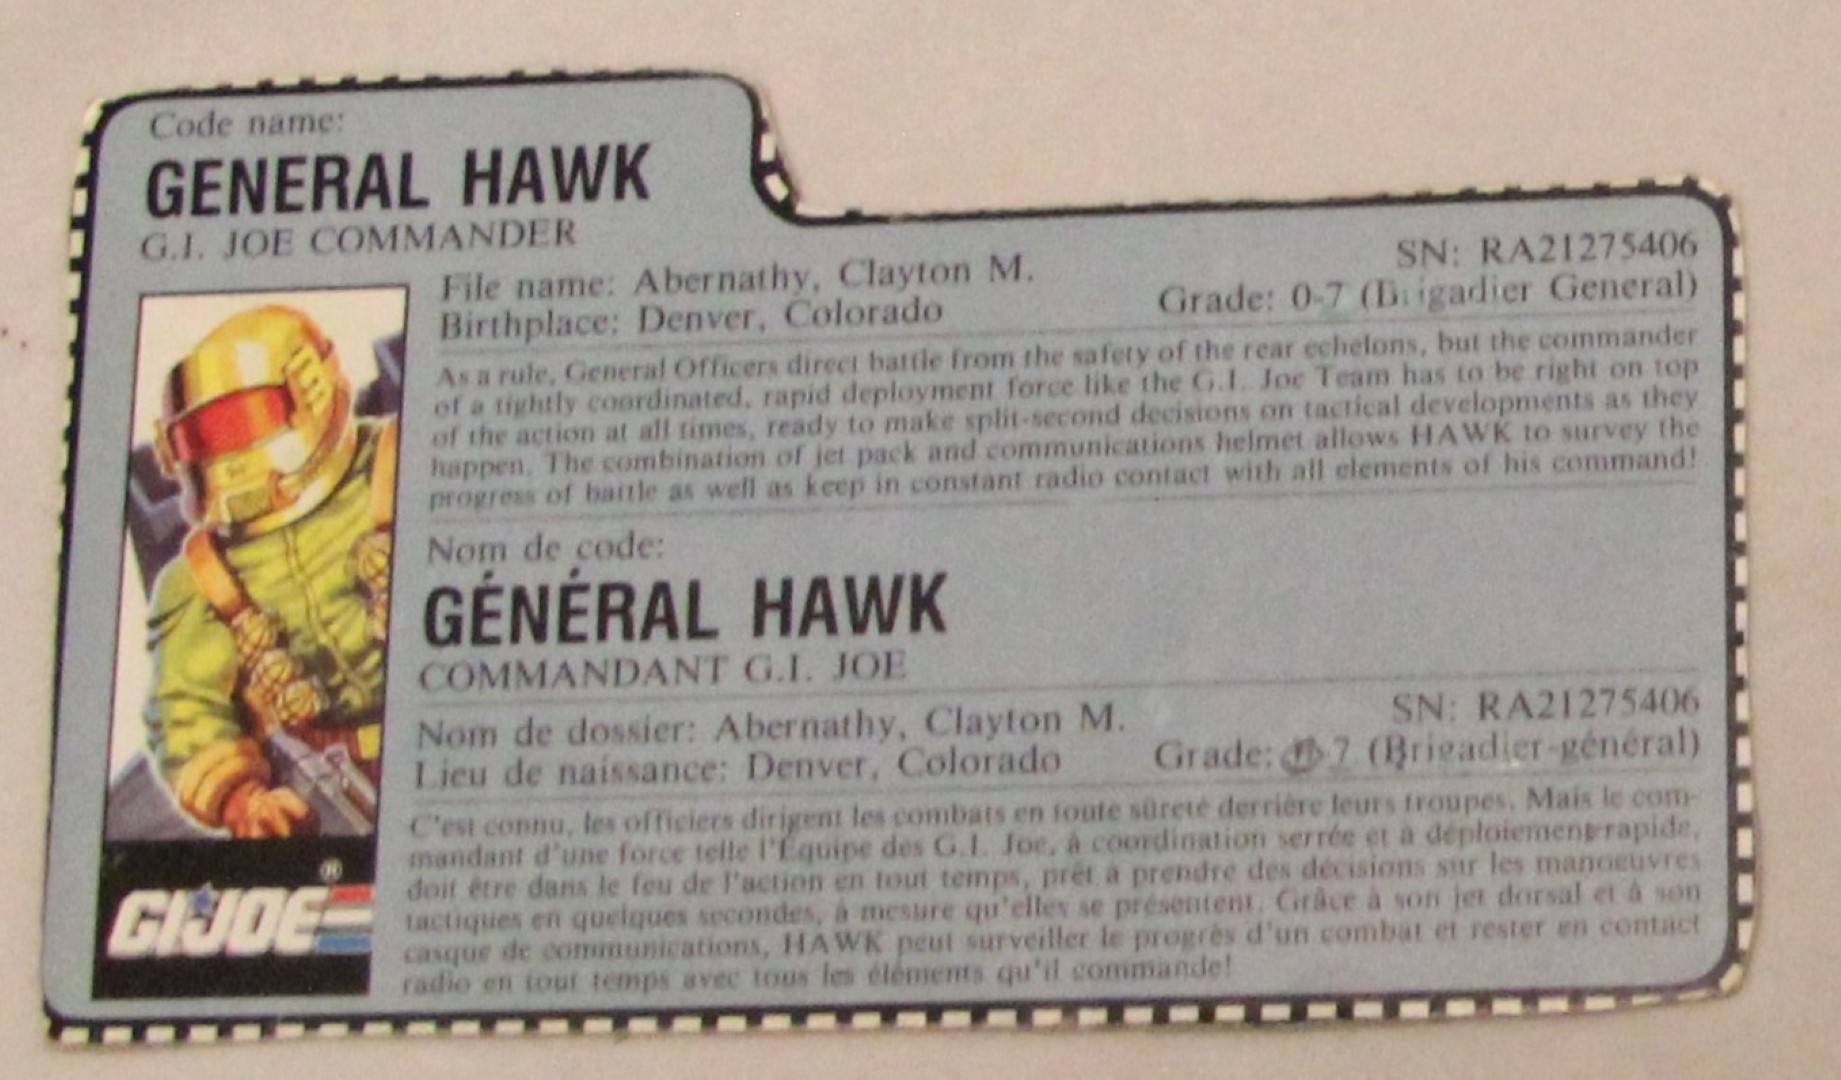 1991 general hawk file card